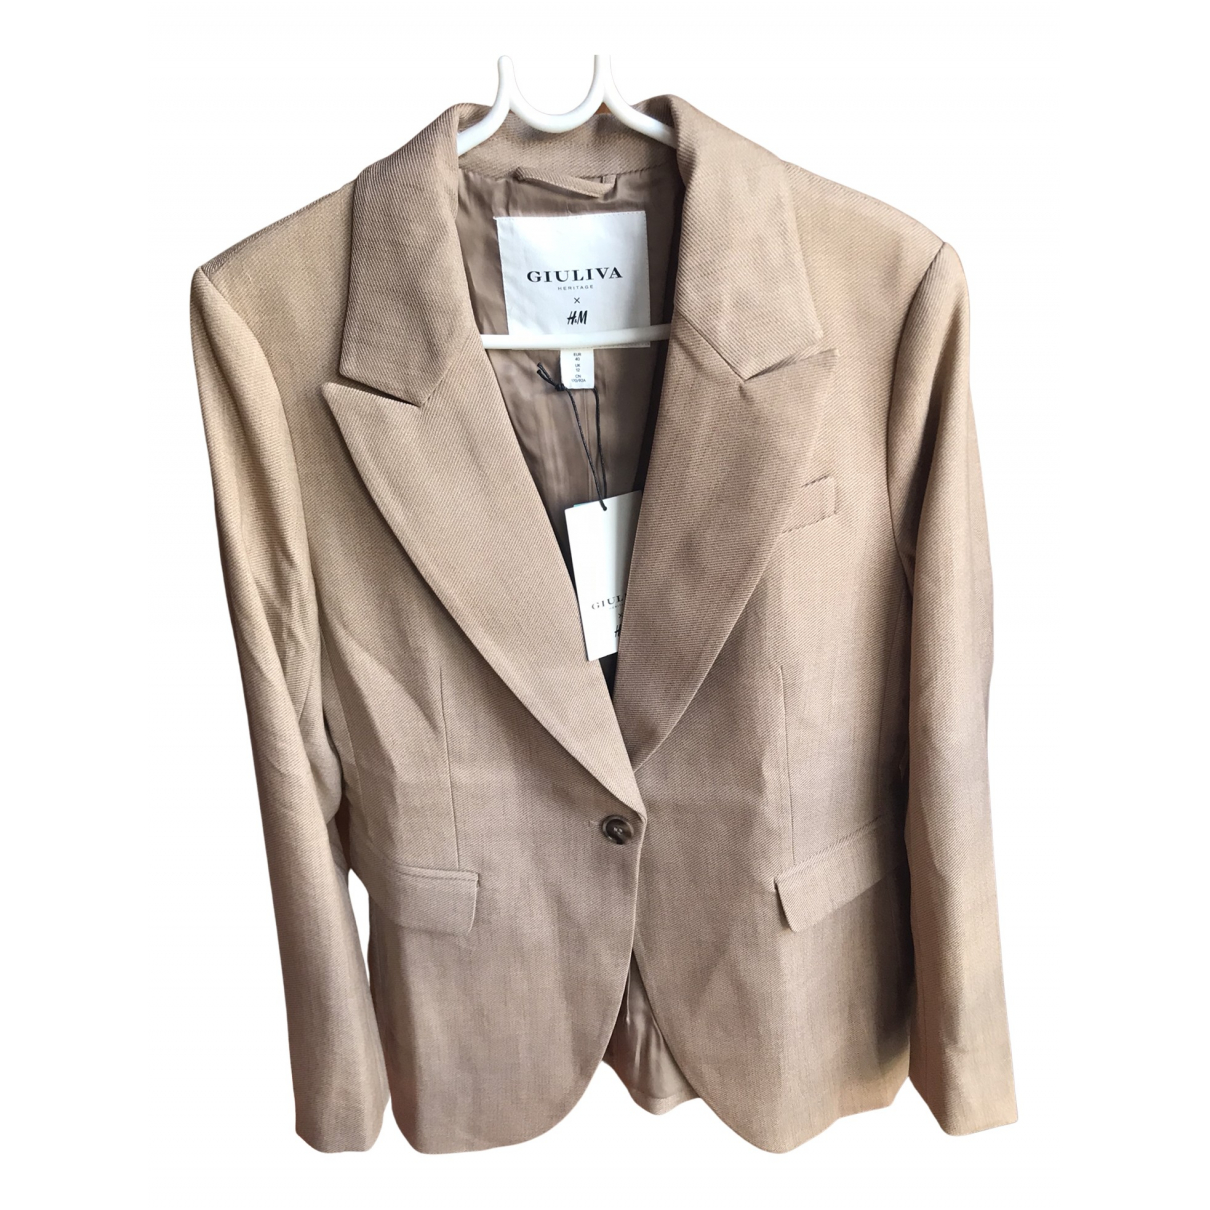 Suit jacket - Giuliva Heritage Collection - Modalova